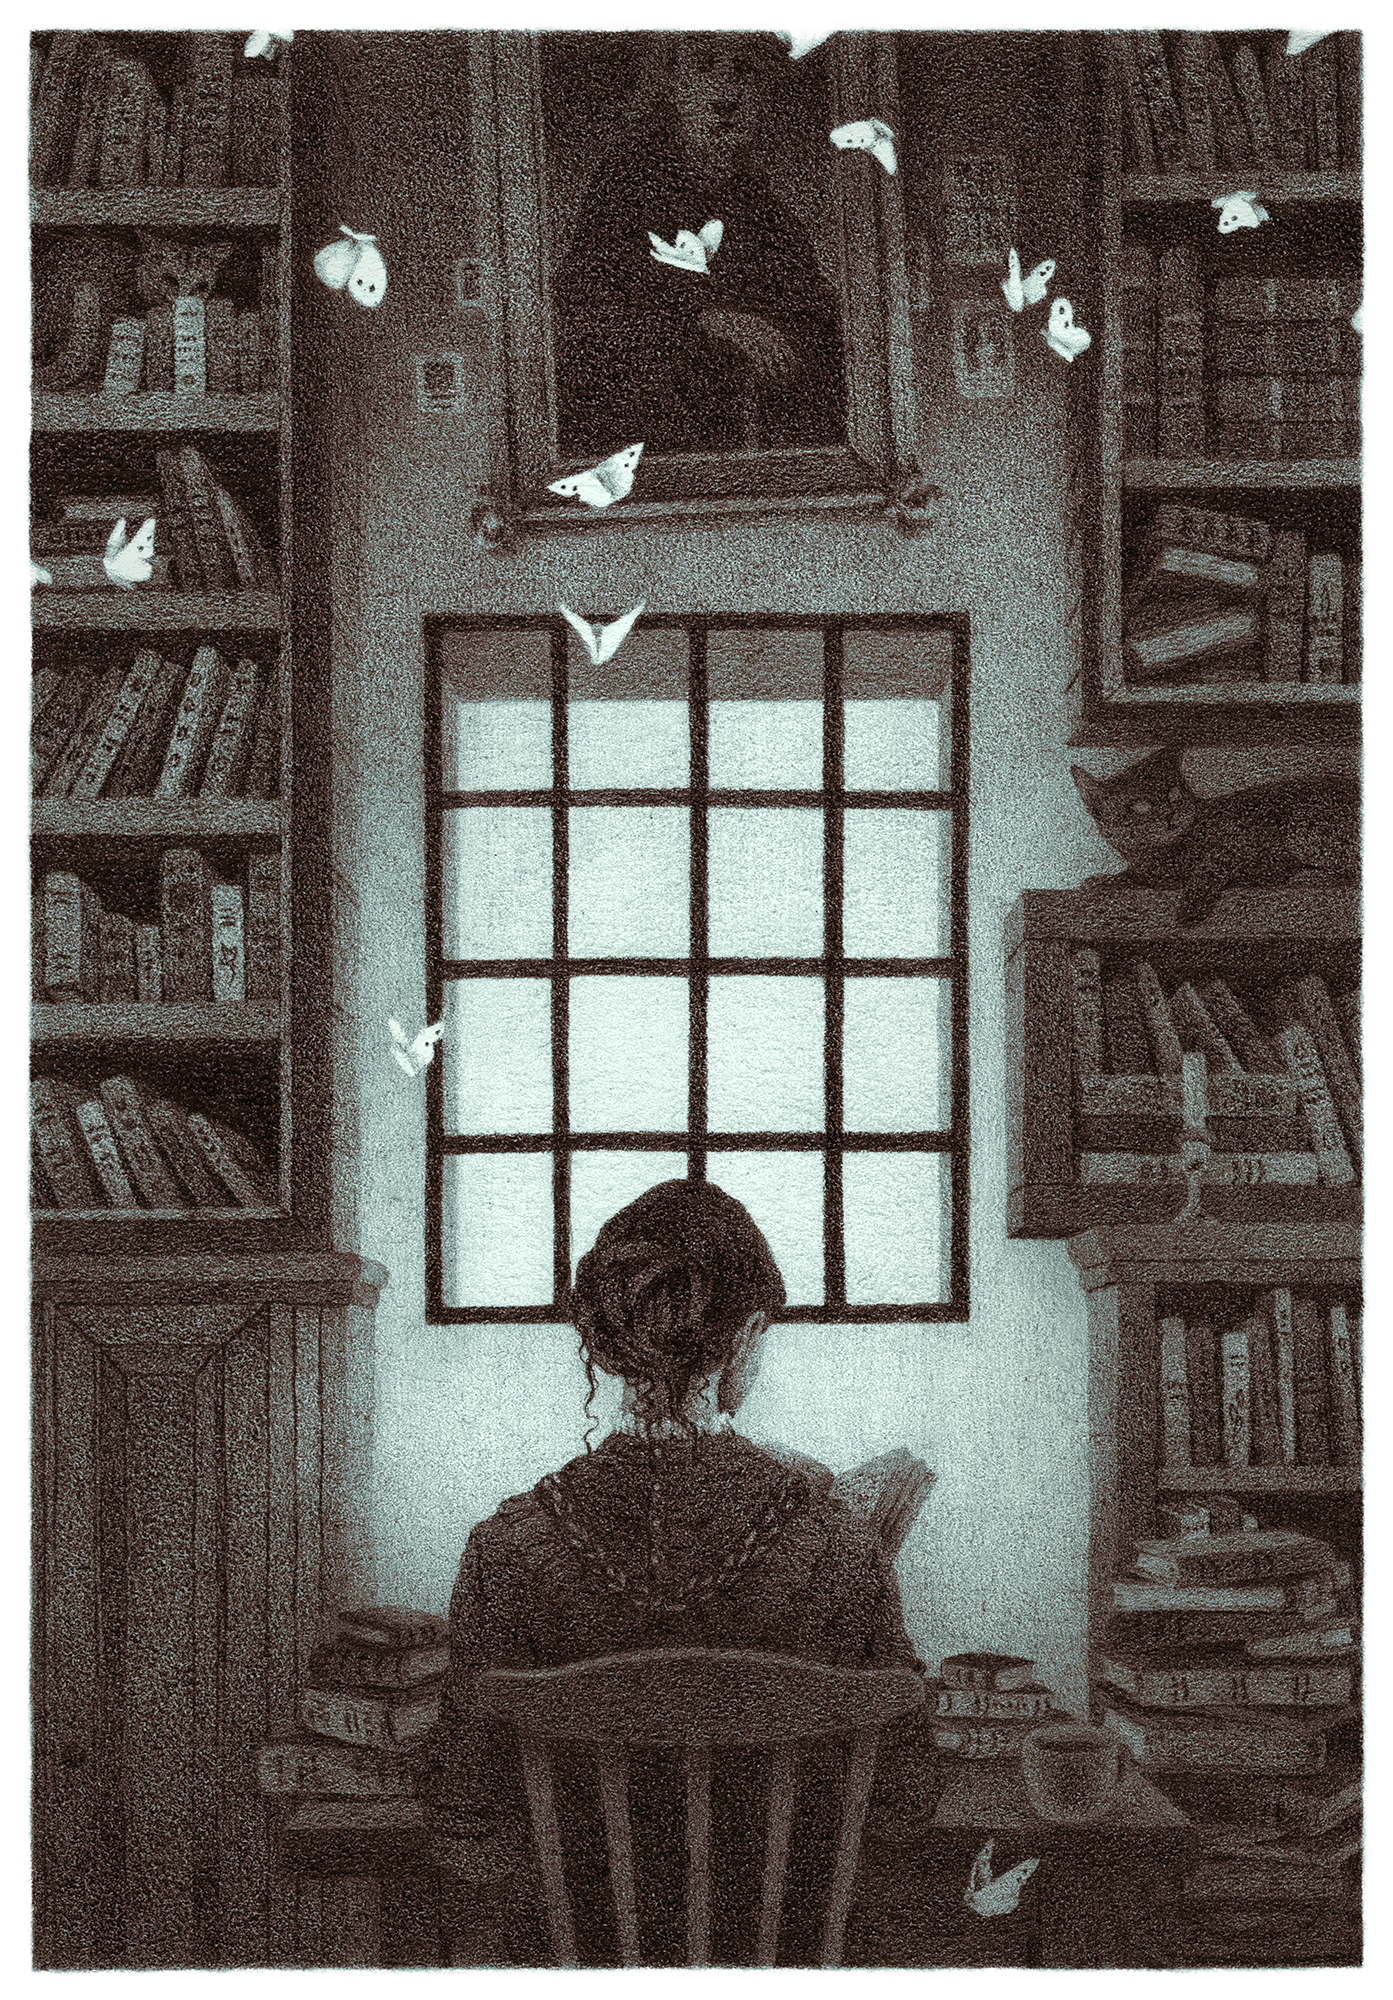 Rosalie-Lettau-Drawtober2-The-Reading-Room.png